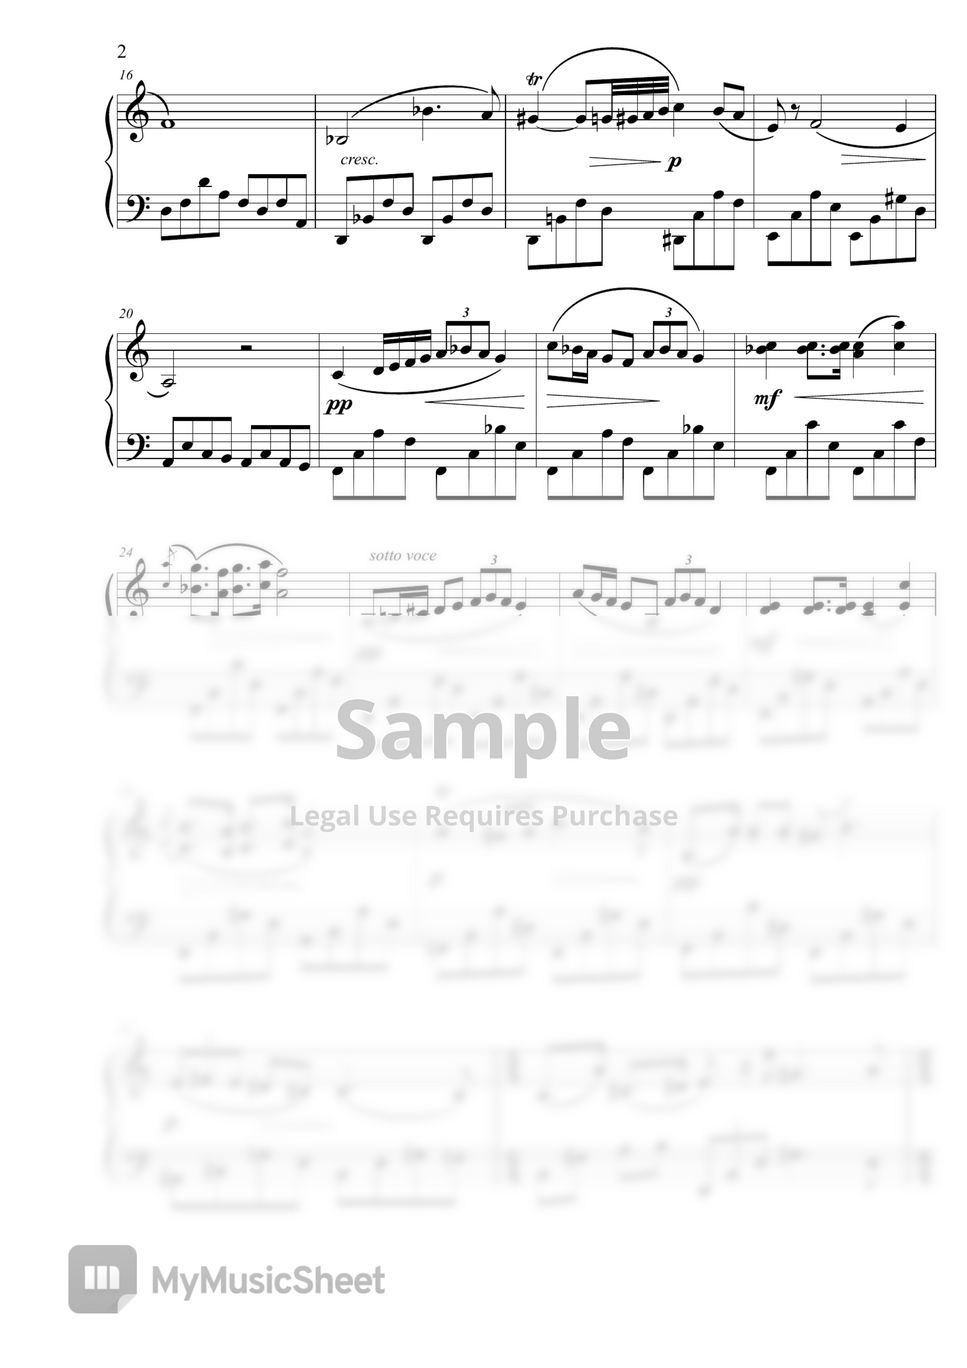 F. Chopin - Chopin Nocturne No.20 Am Key Ver. by 음악 나그네Music Traveler